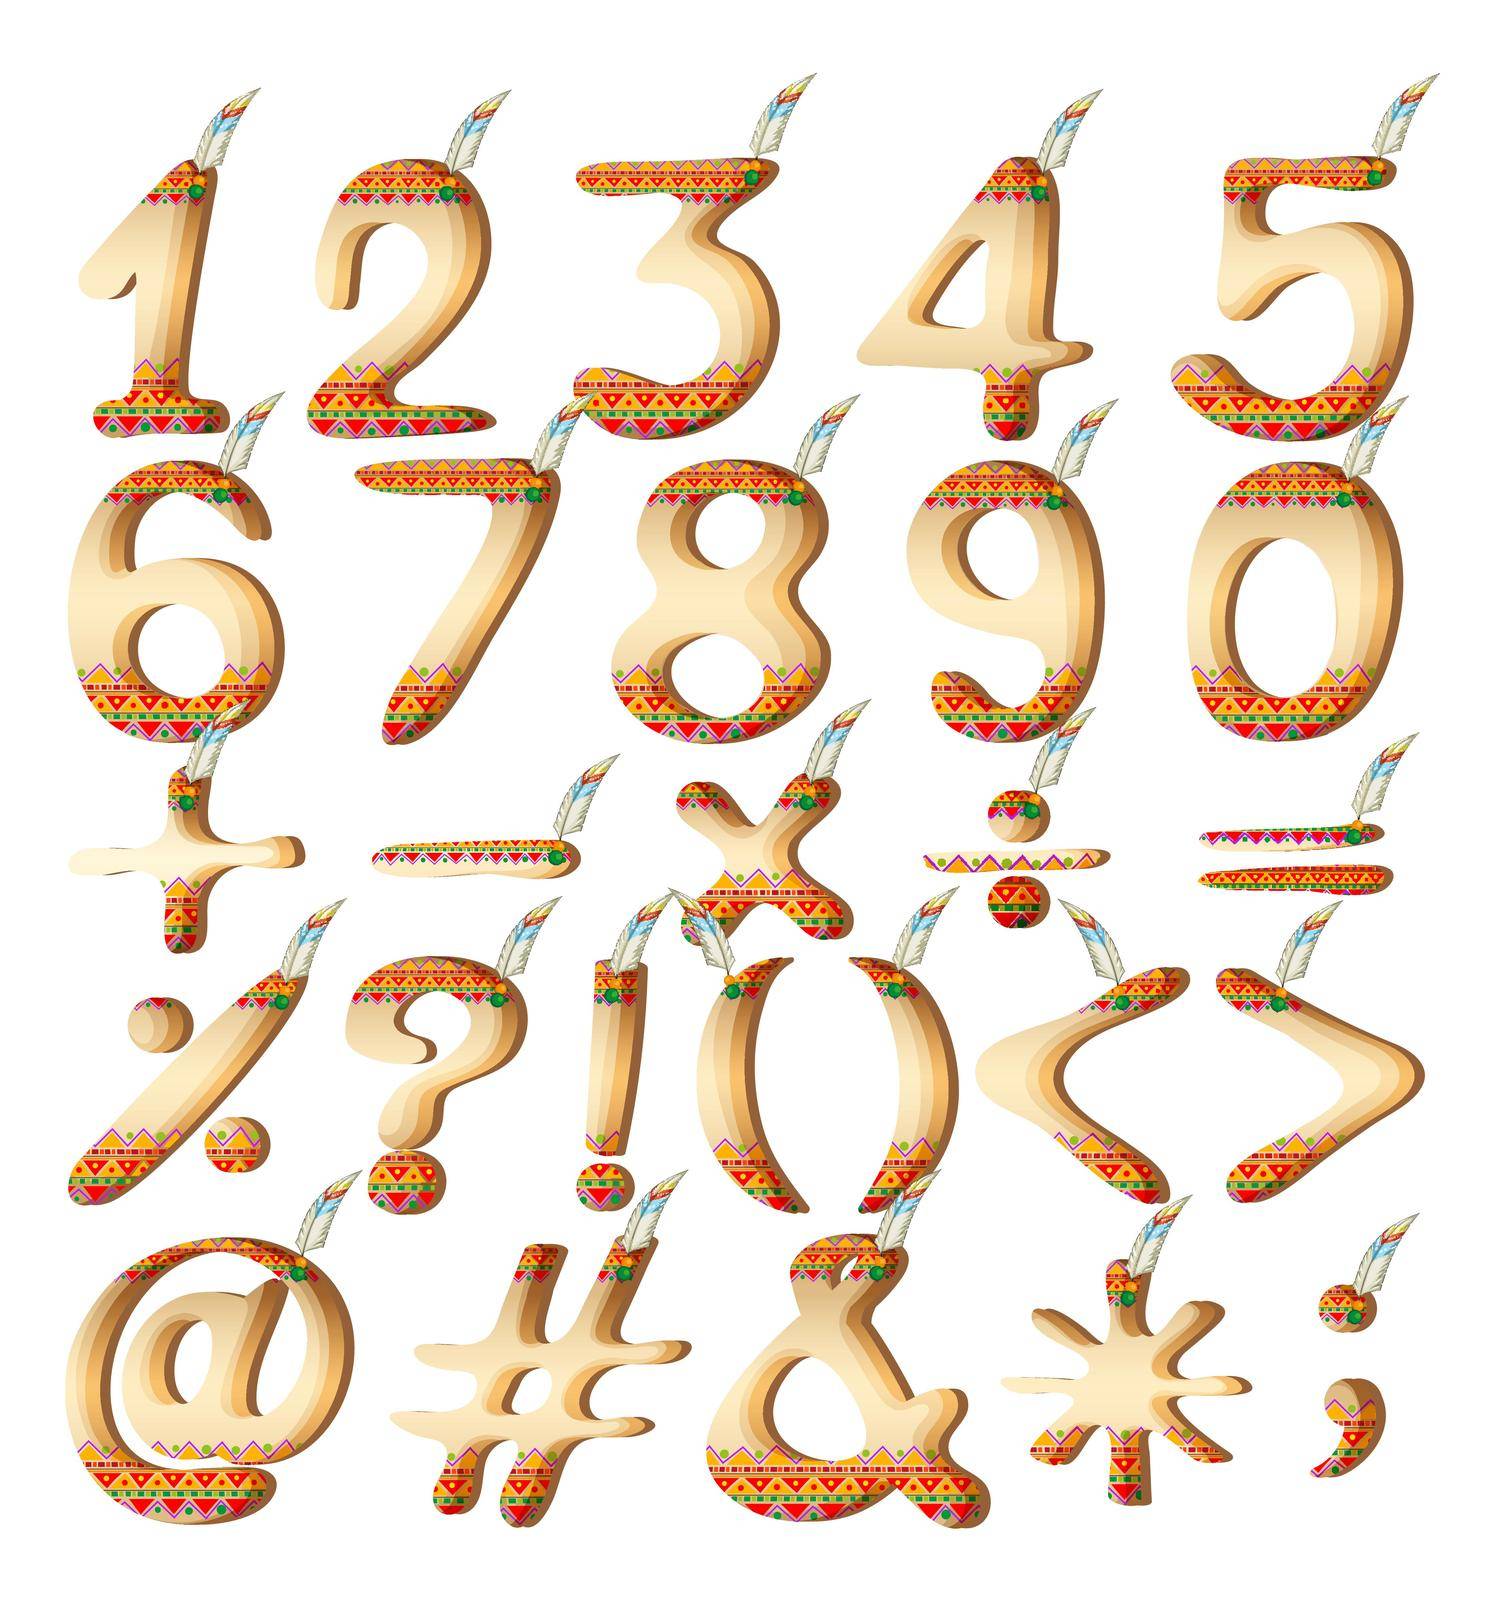 Numeric figures in Indian artwork by iimages